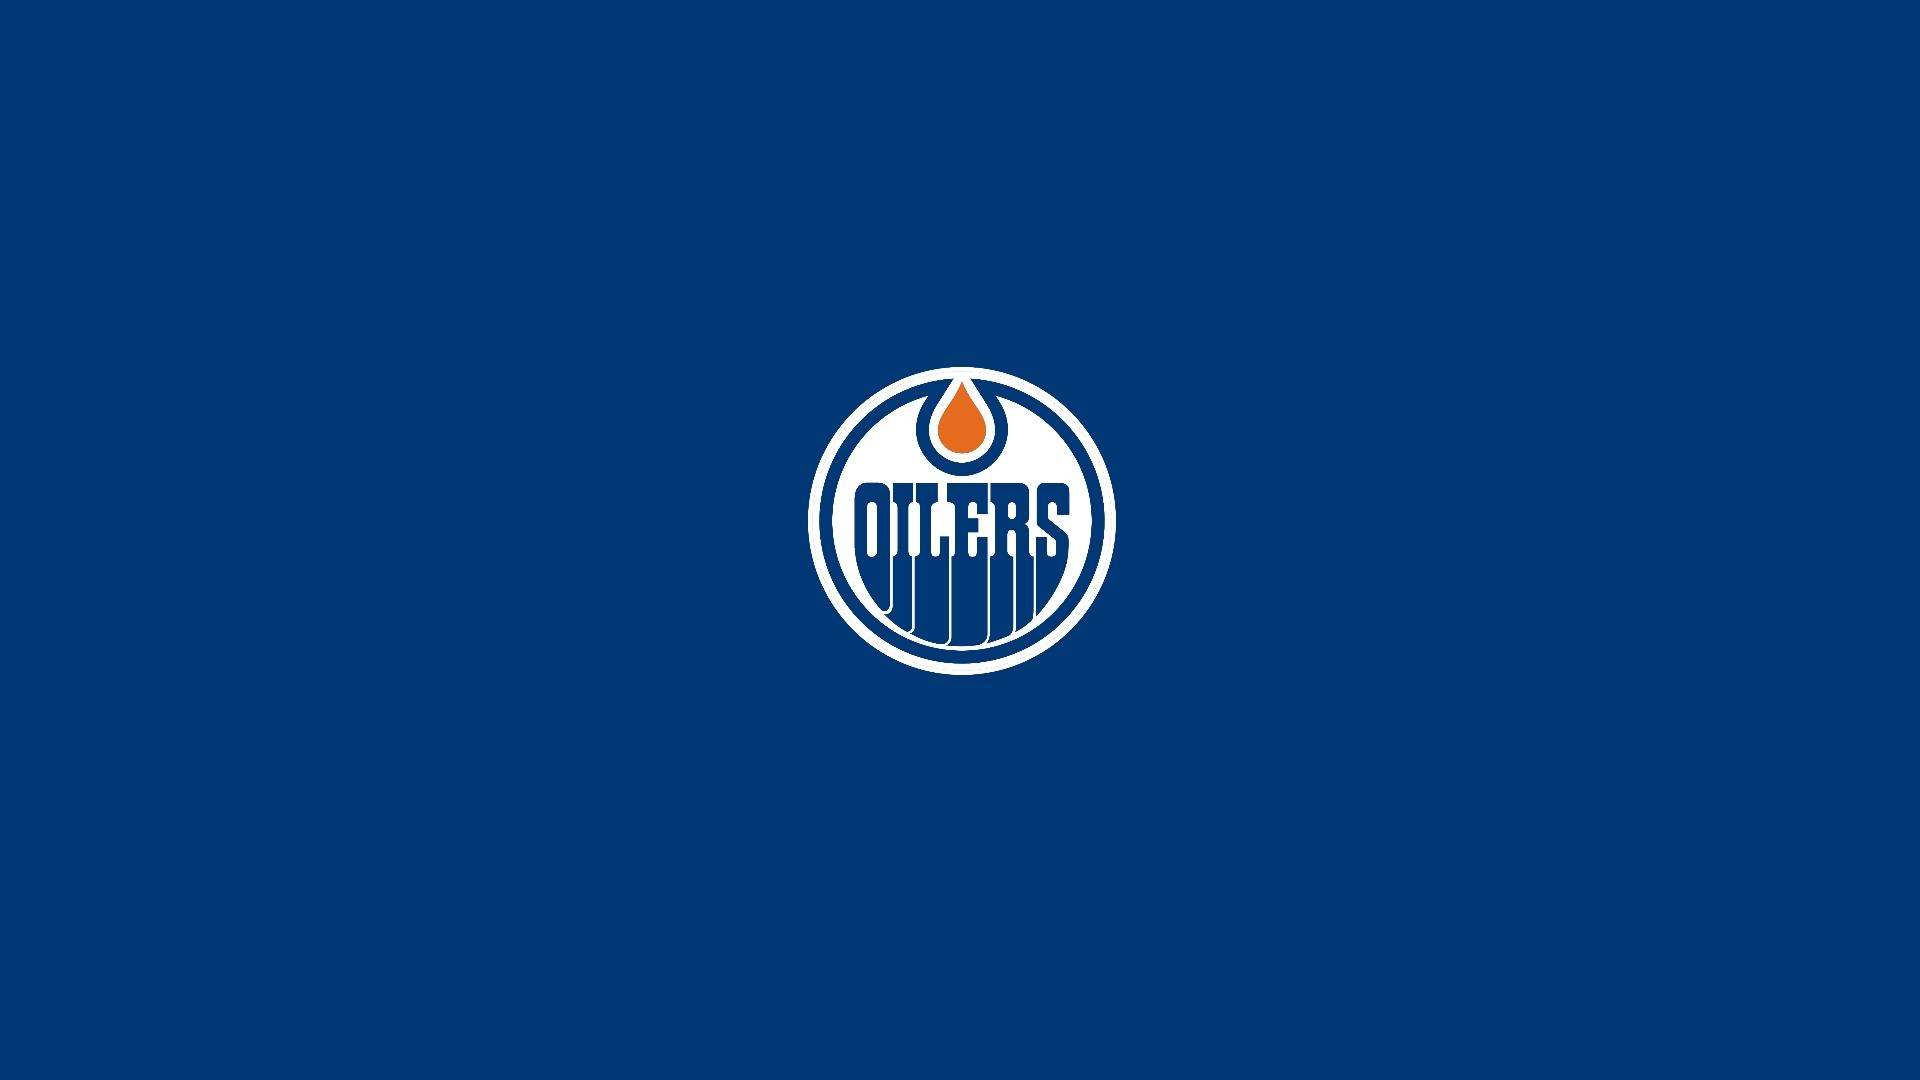 Oilers Wallpaper. NHL Oilers